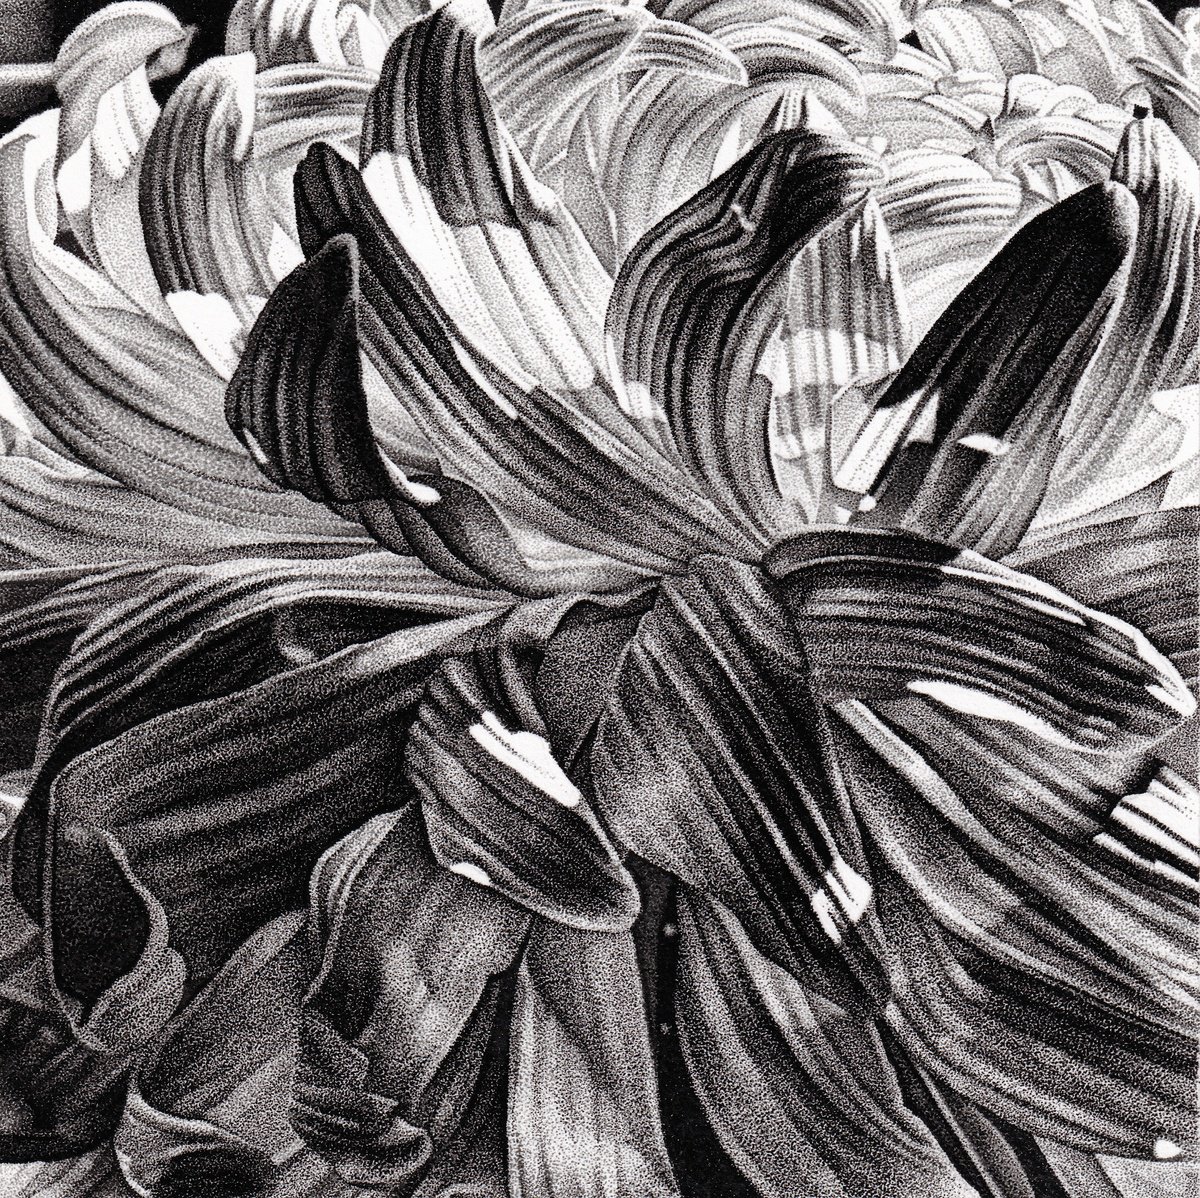 Chrysanthemum Petals by Louis Savage